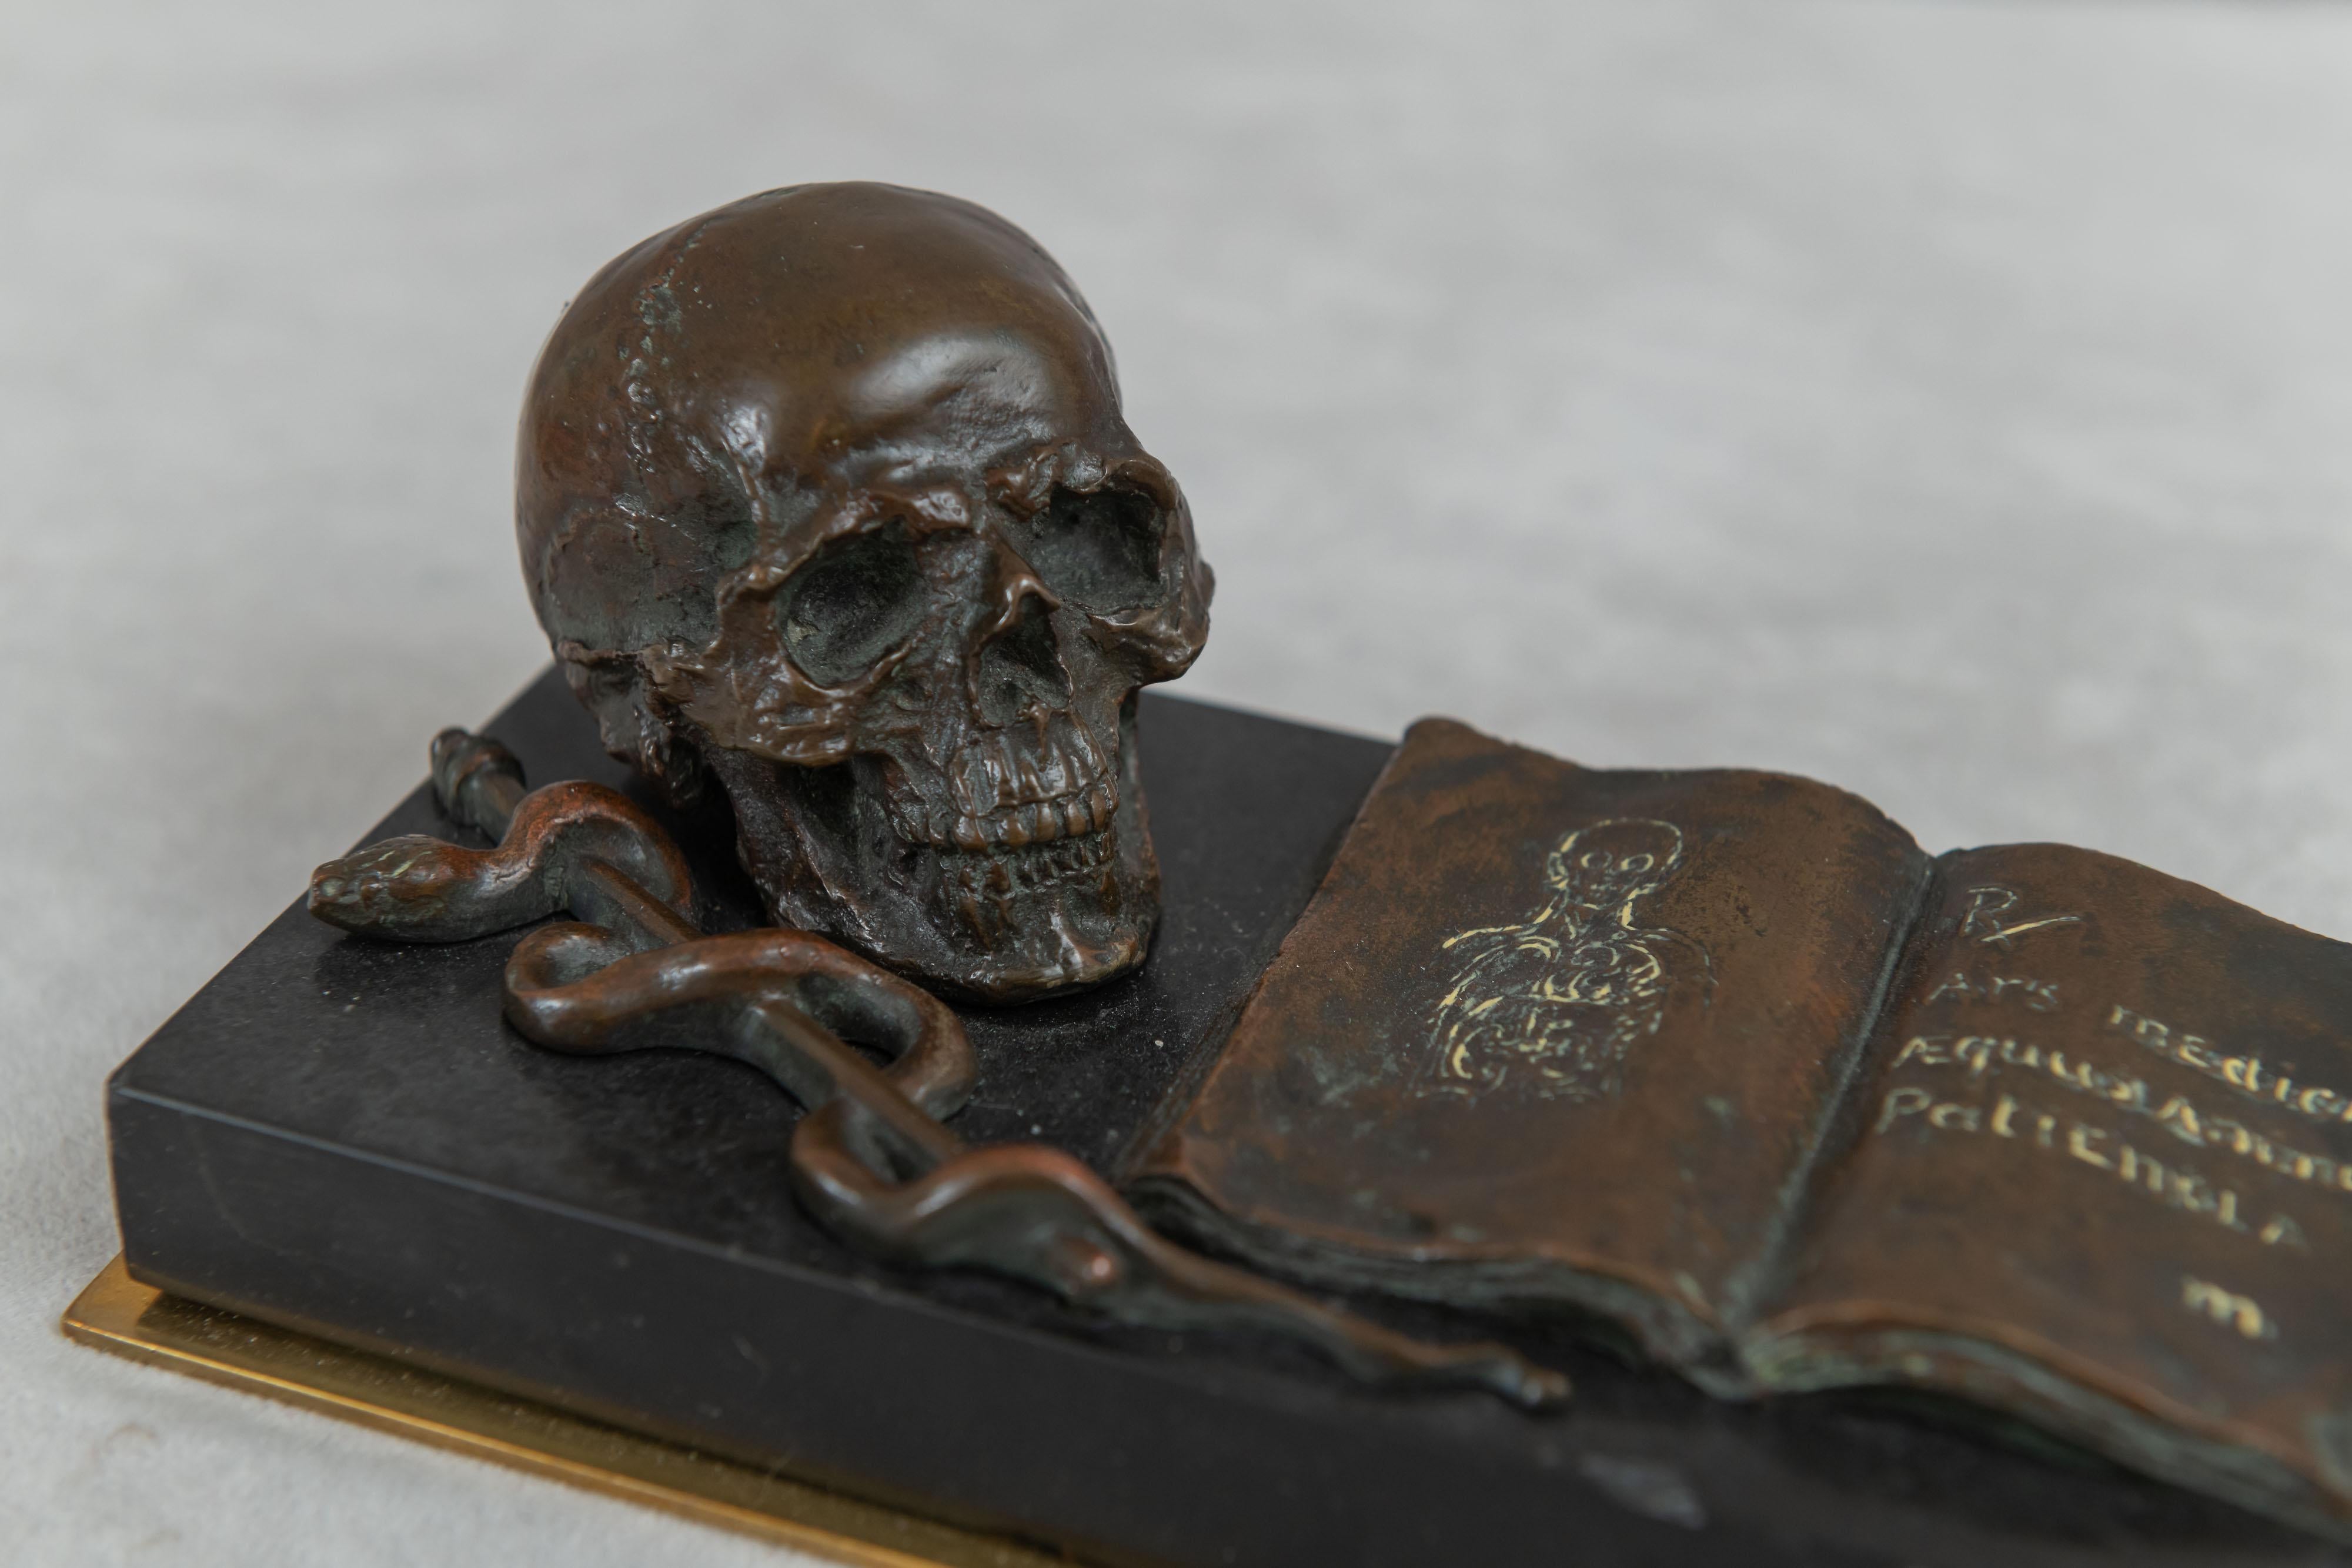 Medical Themed Bronze Desk Item, Skull, Caduceus, and Medical Book ca. 1900 1